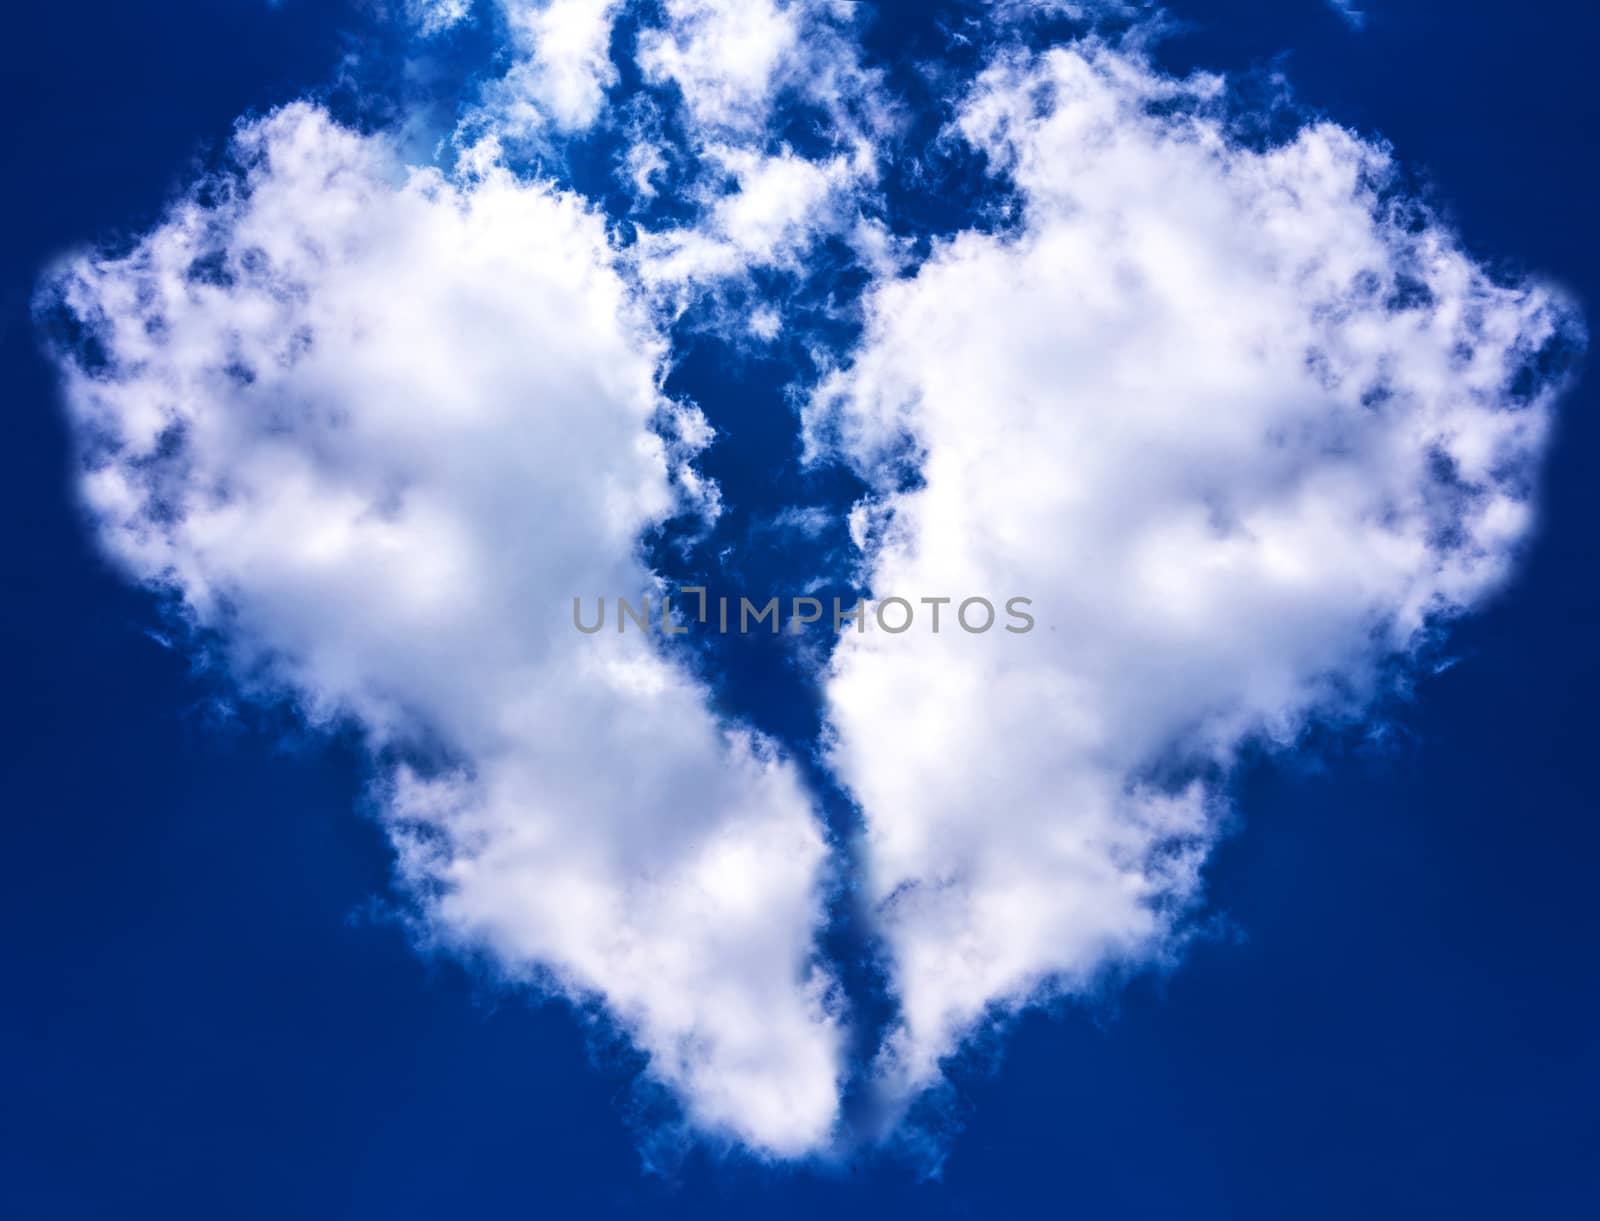 White smoke cloud with broken heart shape.